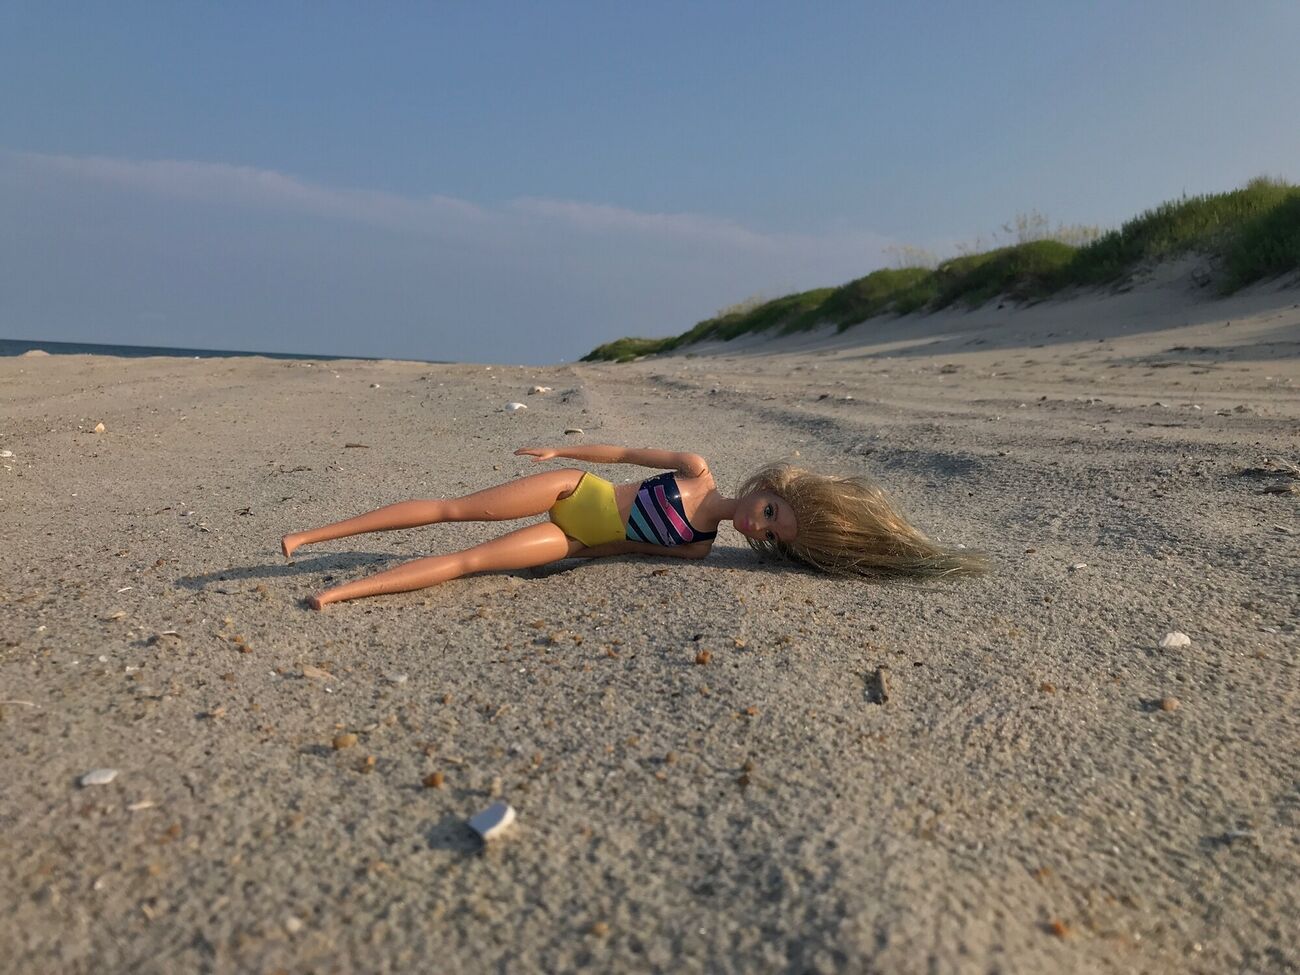 Barbie is plastic. Plastic on the beach is litter.